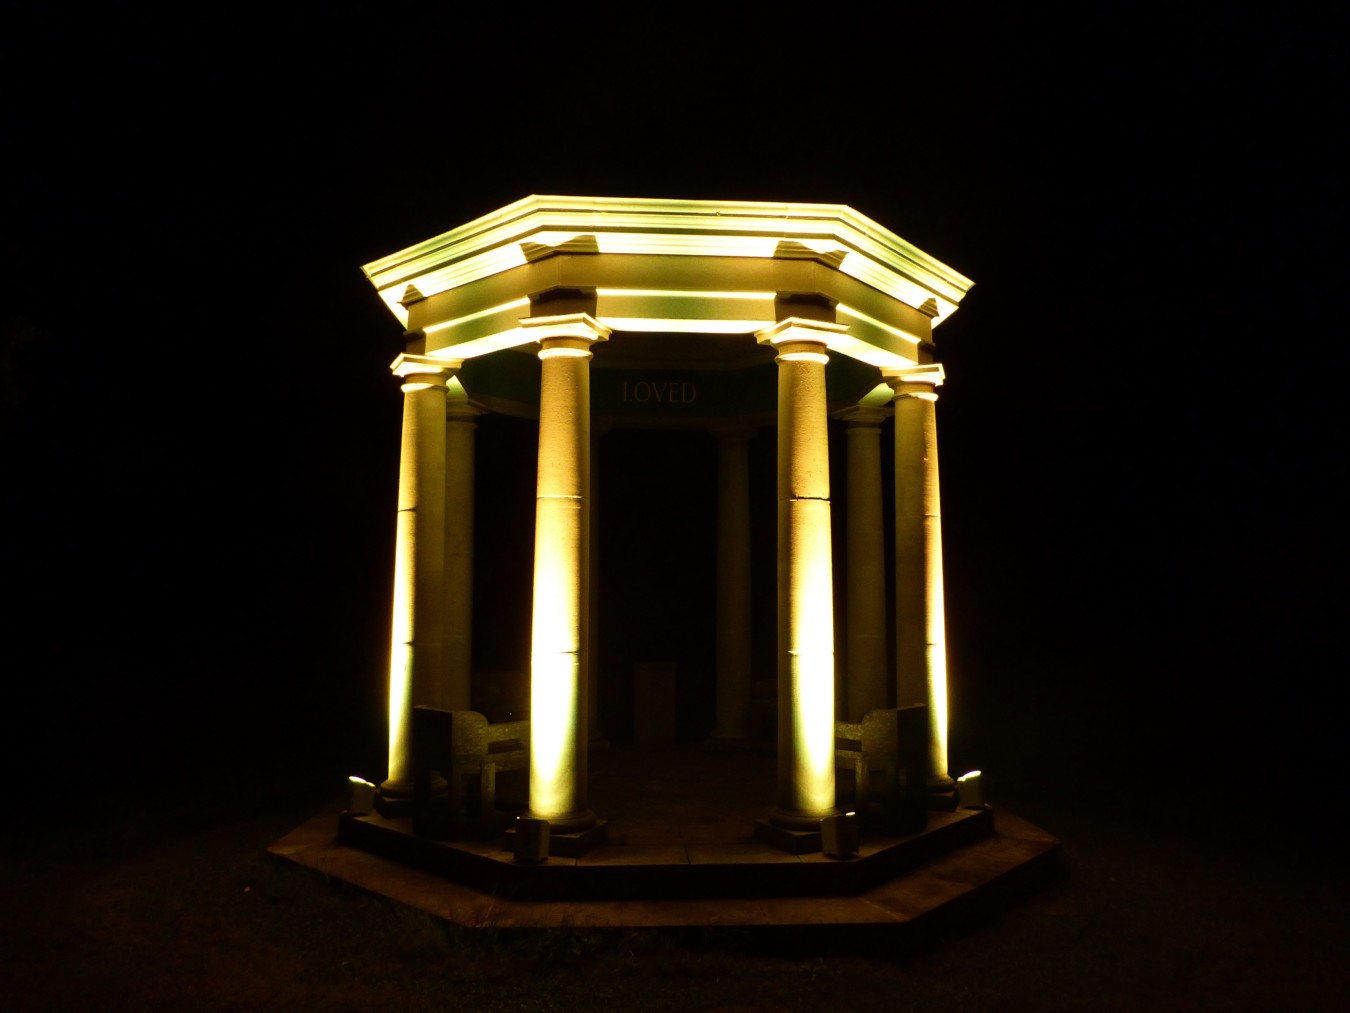 Bignor park - filming & photoshoots temple lit a night